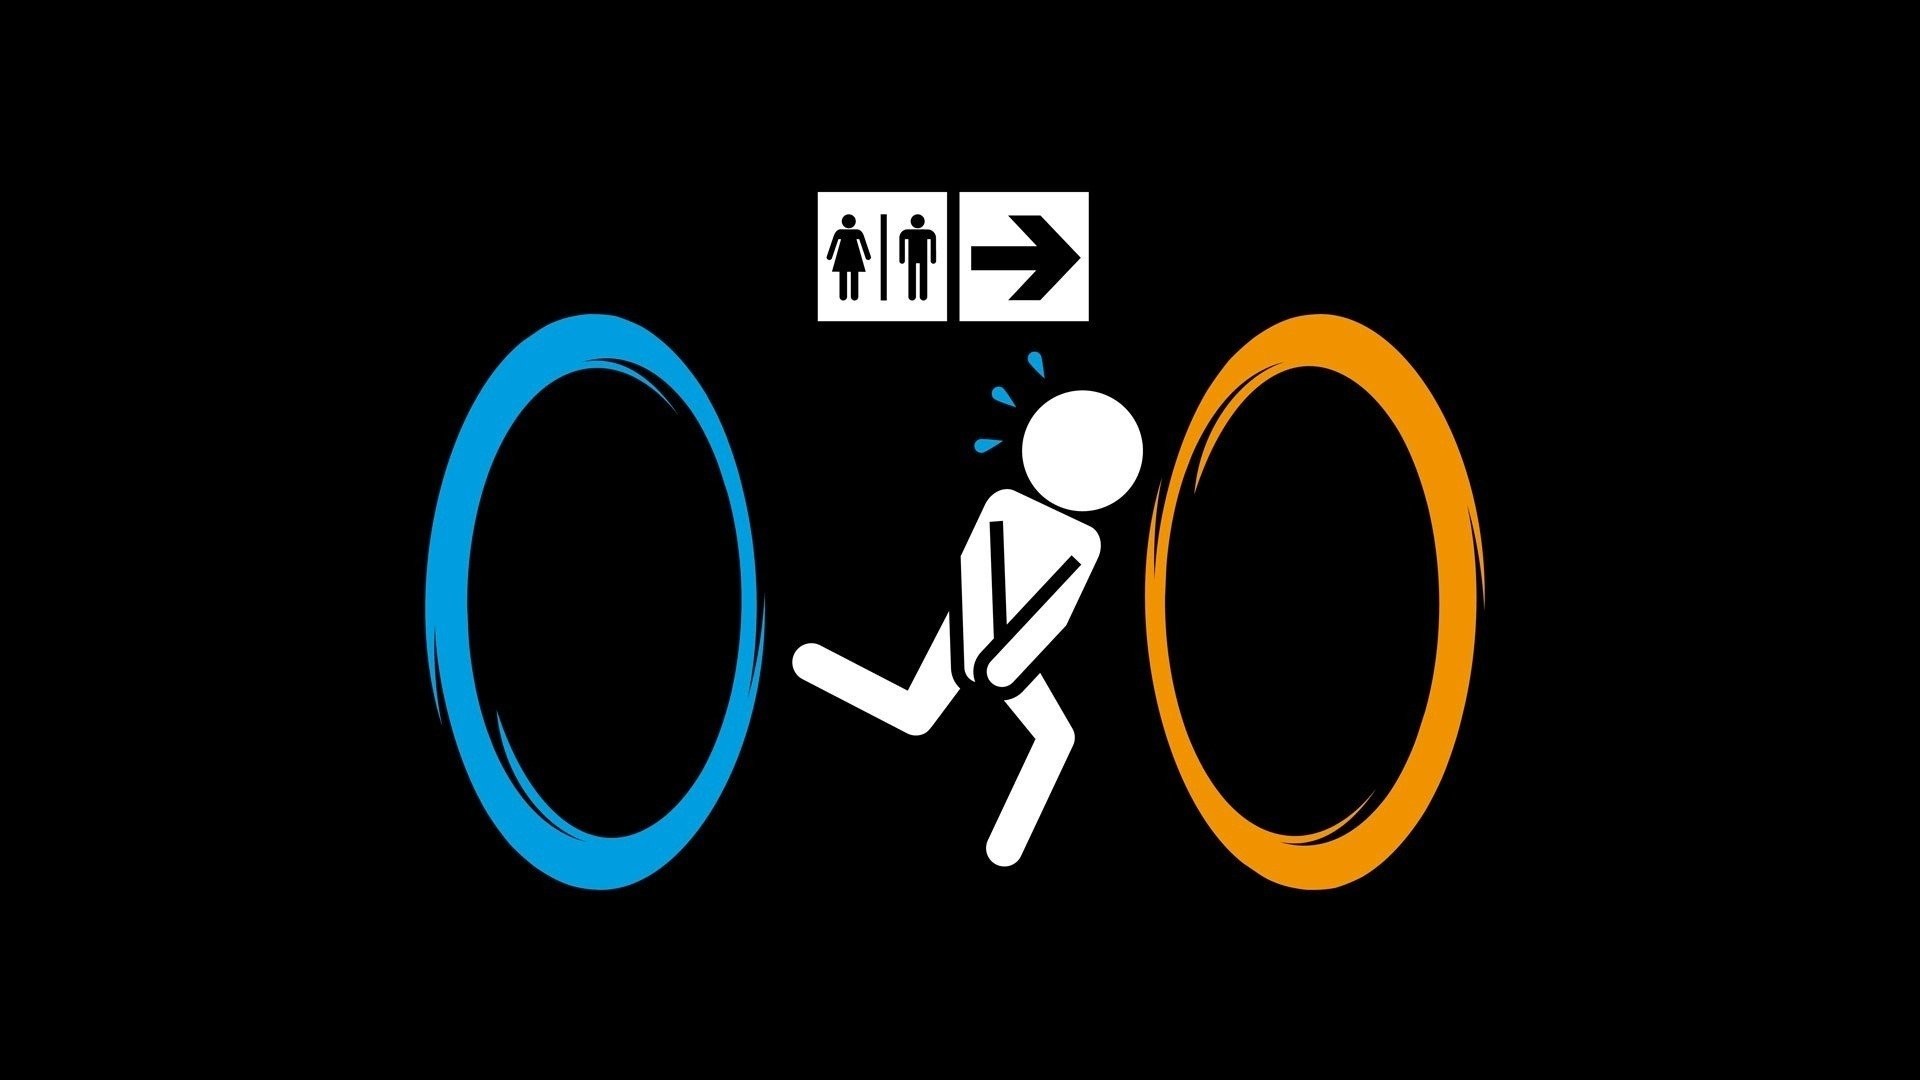 1920x1080 Bathroom Black Background Funny Minimalistic Portal Running Signs Video  Games